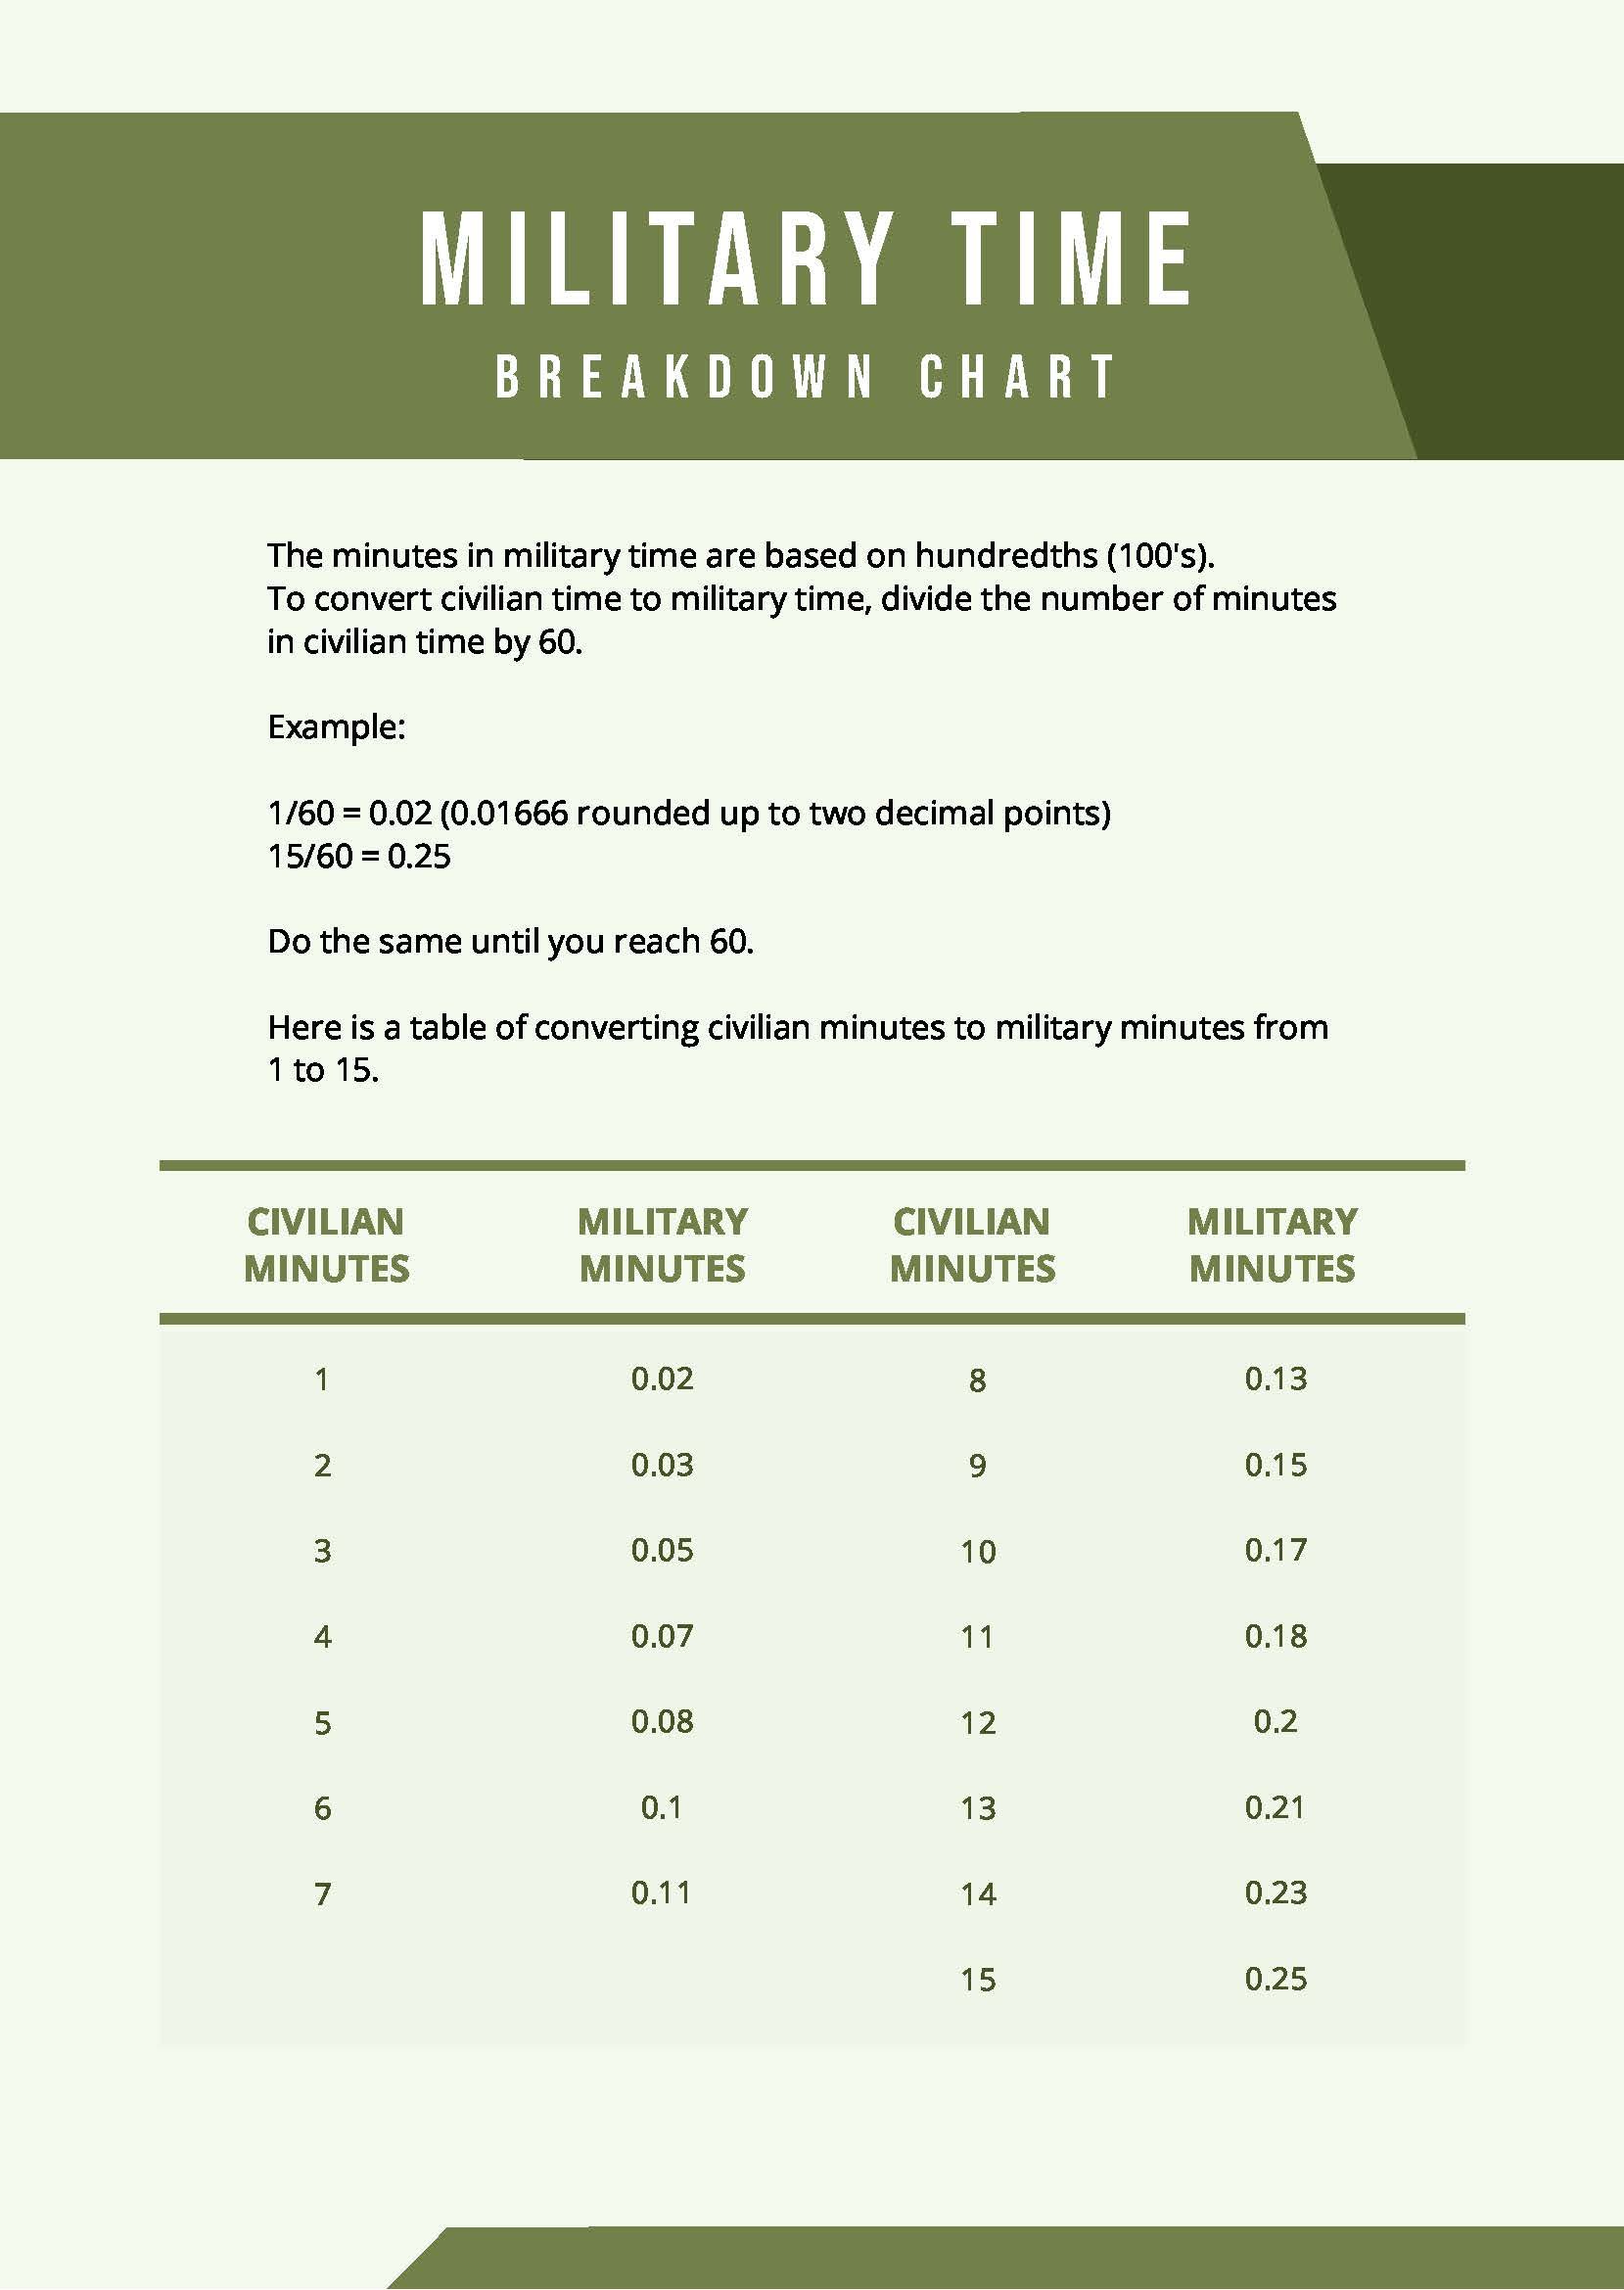 Military Time Breakdown Chart in PDF